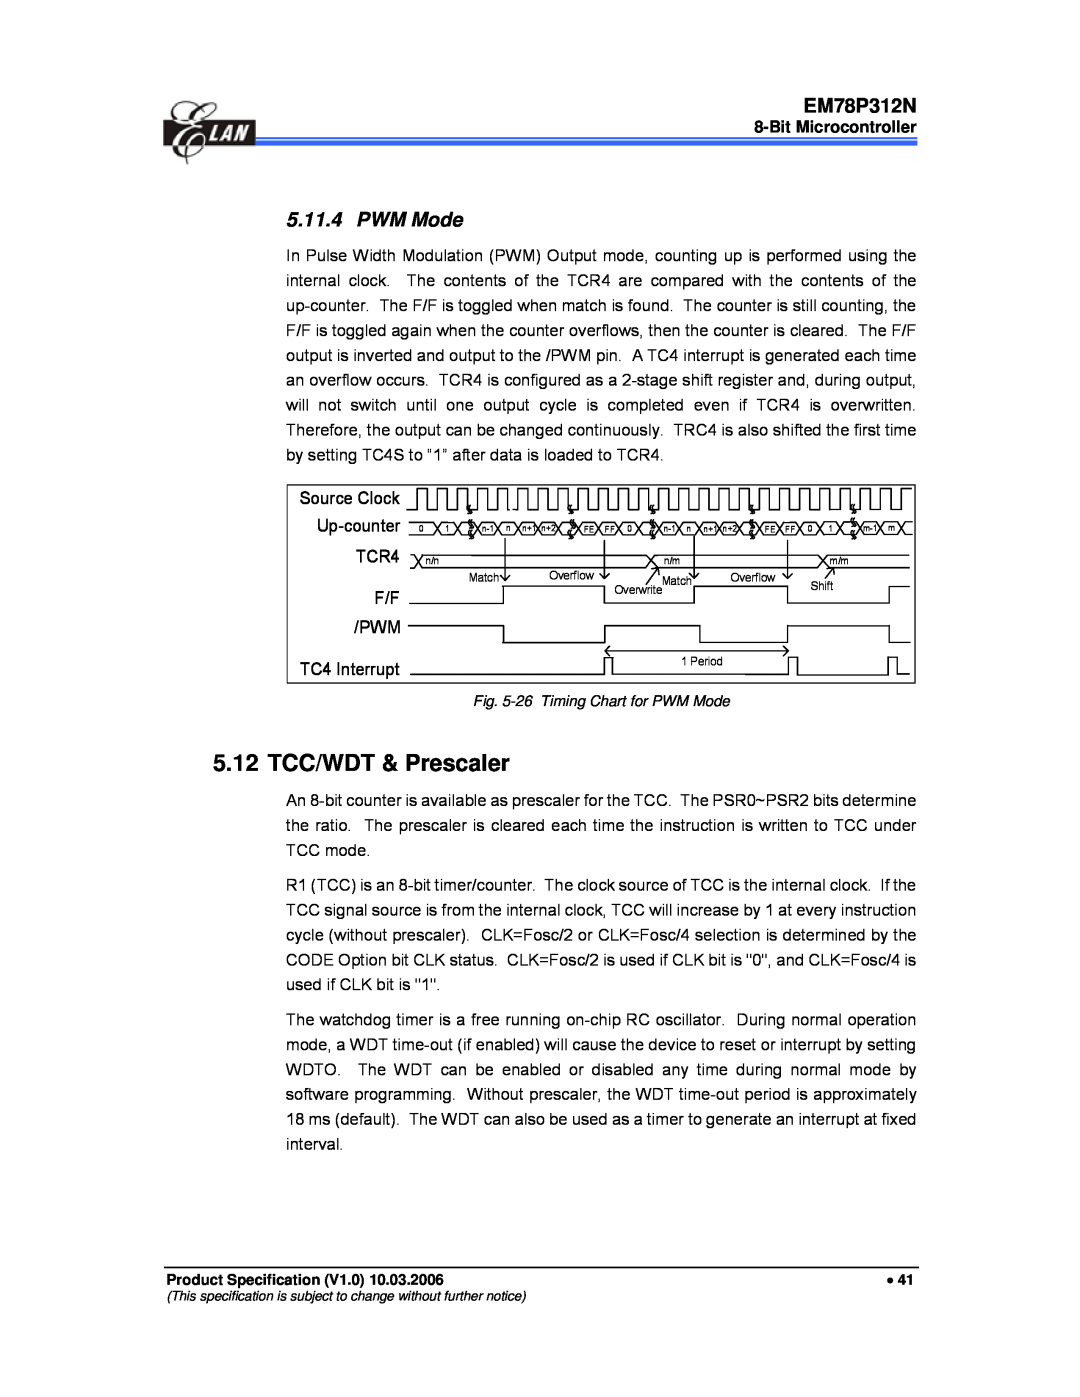 IBM EM78P312N manual 5.12 TCC/WDT & Prescaler, PWM Mode, Bit Microcontroller 